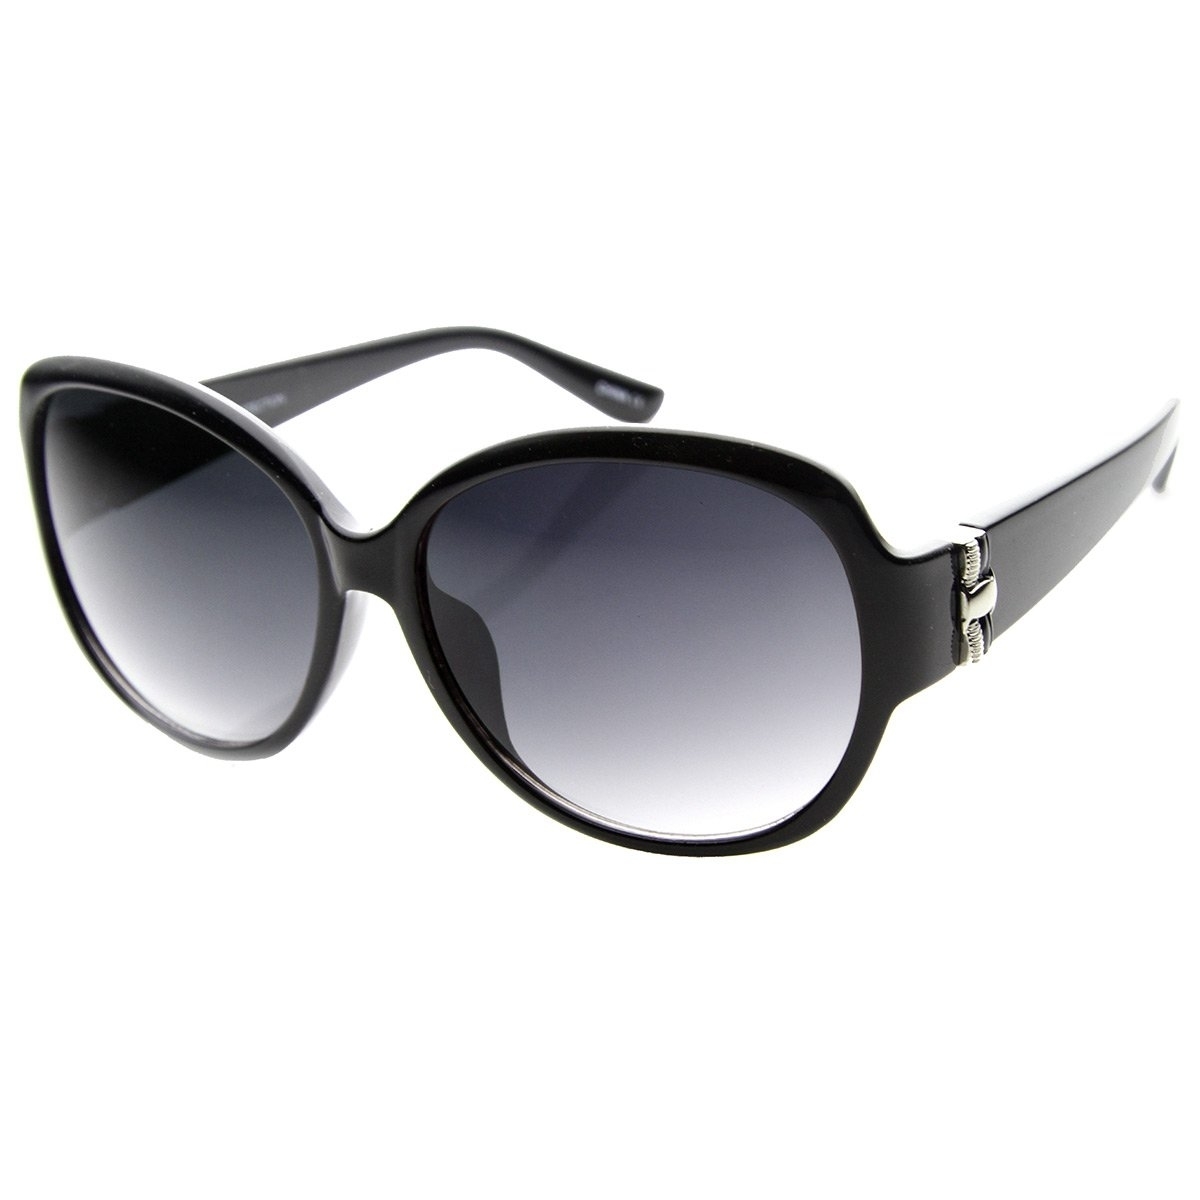 Designer Large Metal Accent Round Oversized Sunglasses - Black-Black Lavender